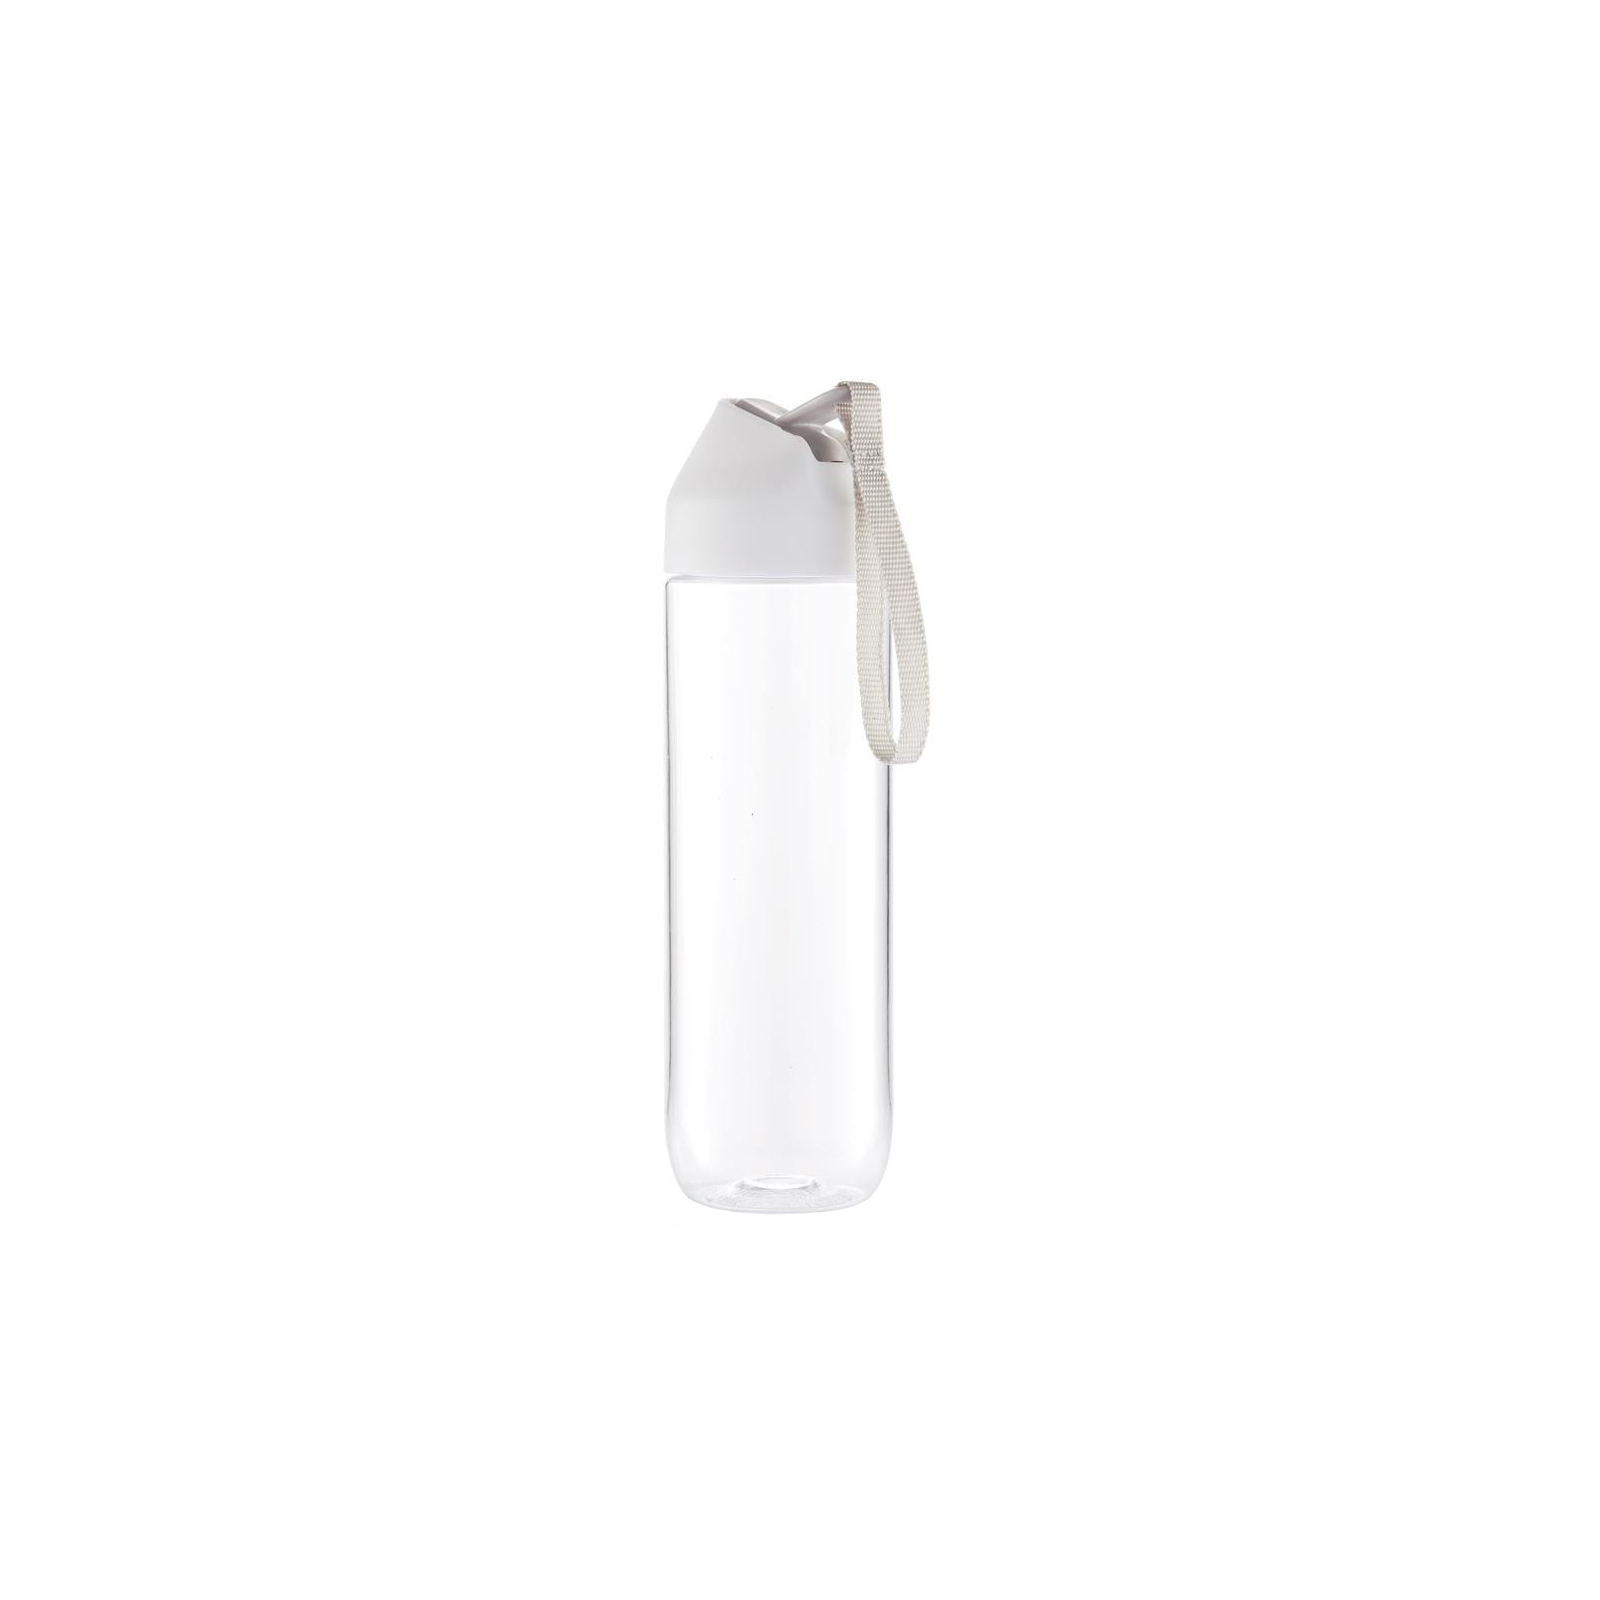 Бутылка для воды XD Modo Tritan белая (P436.063)